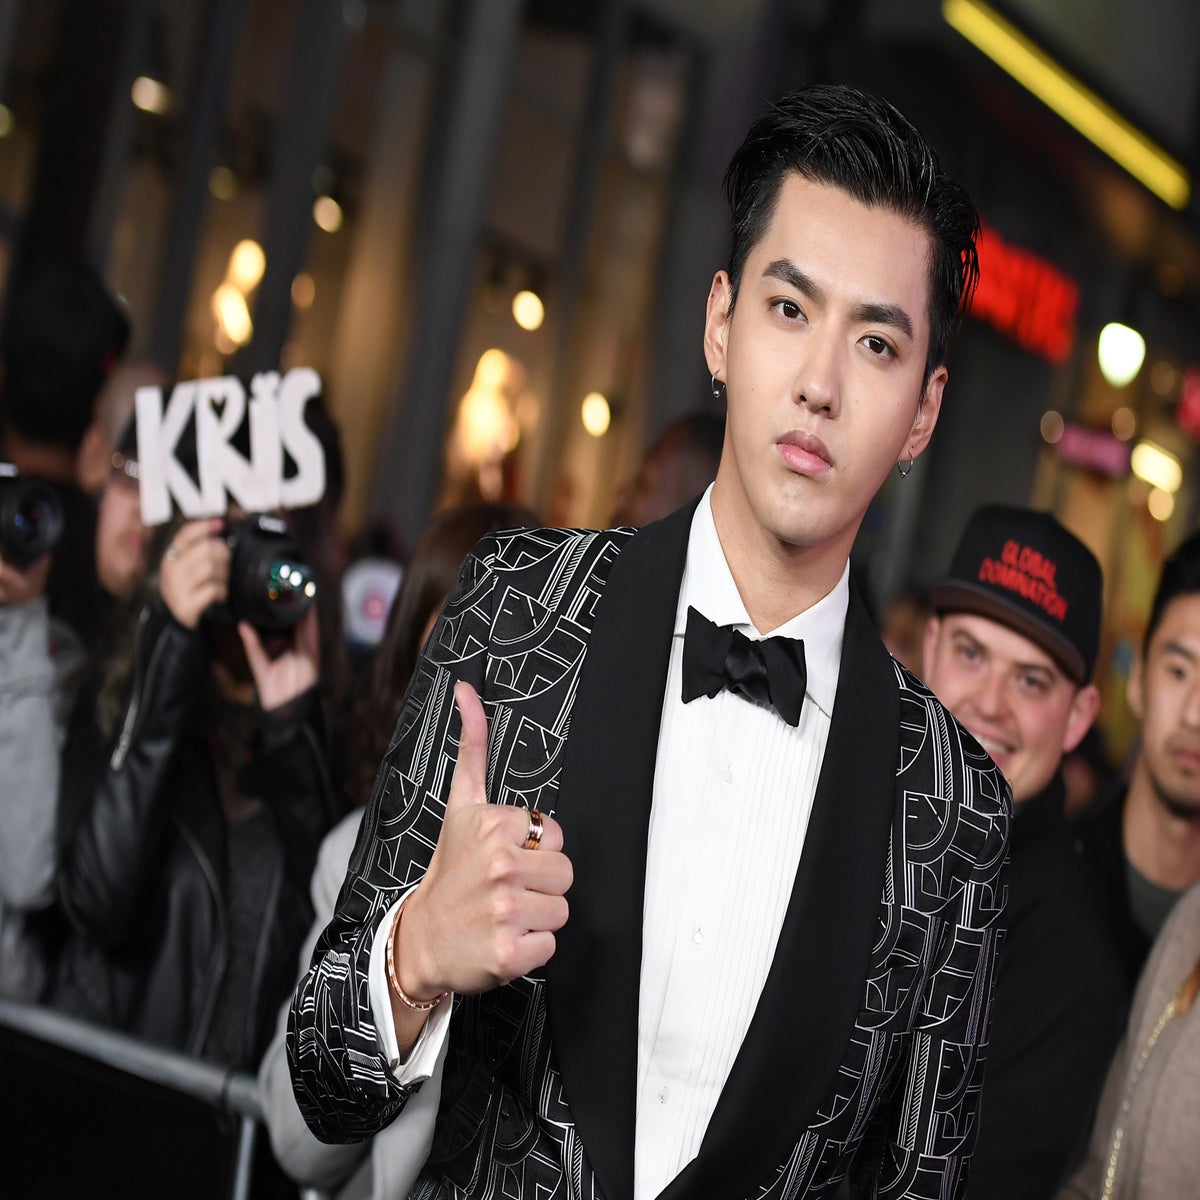 Chinese star Kris Wu denies luring underaged girls with acting